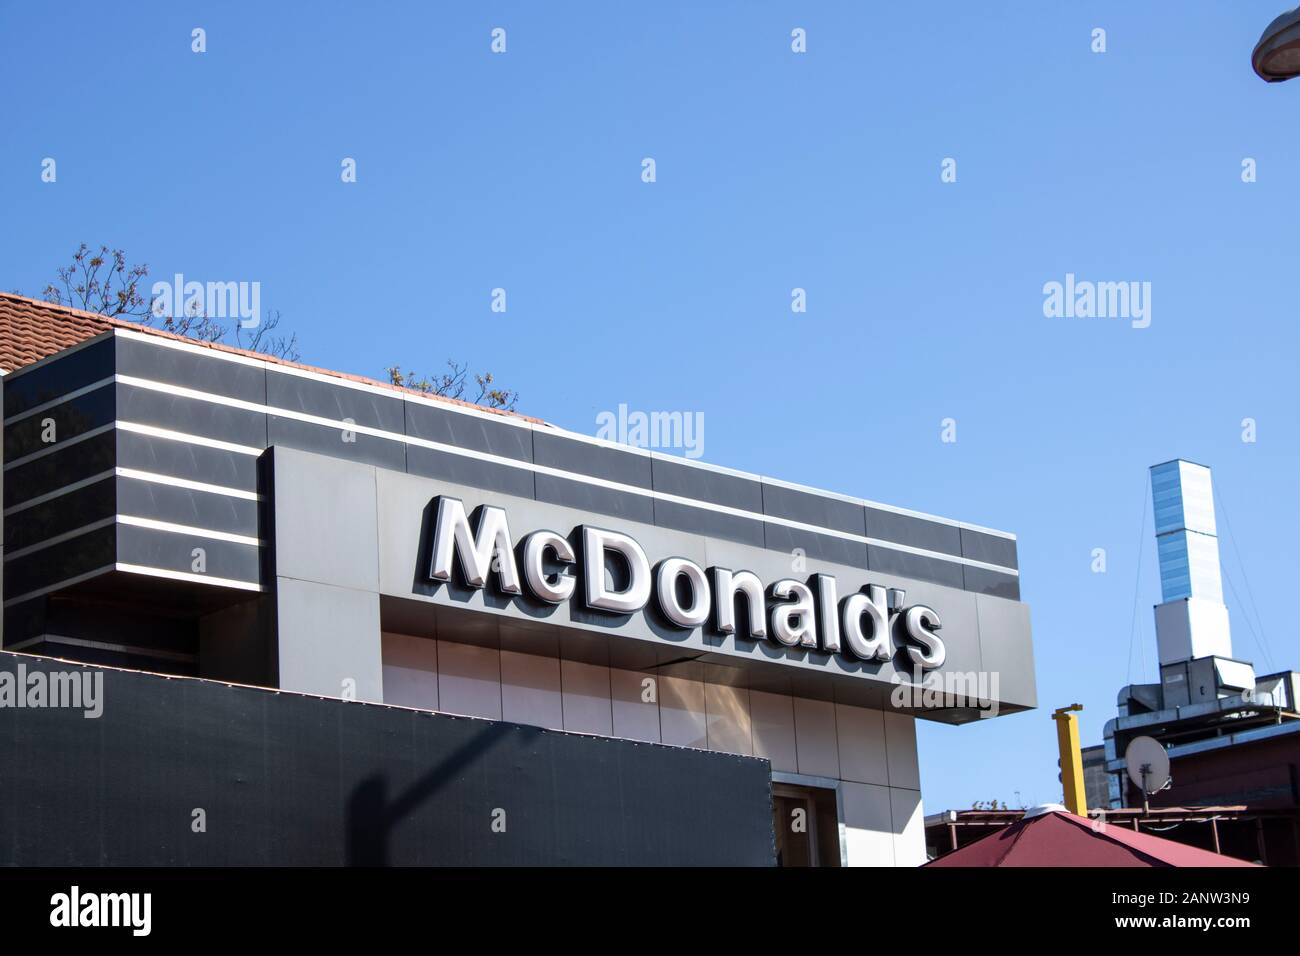 McDonald's restaurant sign. The McDonald's Corporation is the world's largest chain of hamburger fast food restaurants. Stock Photo